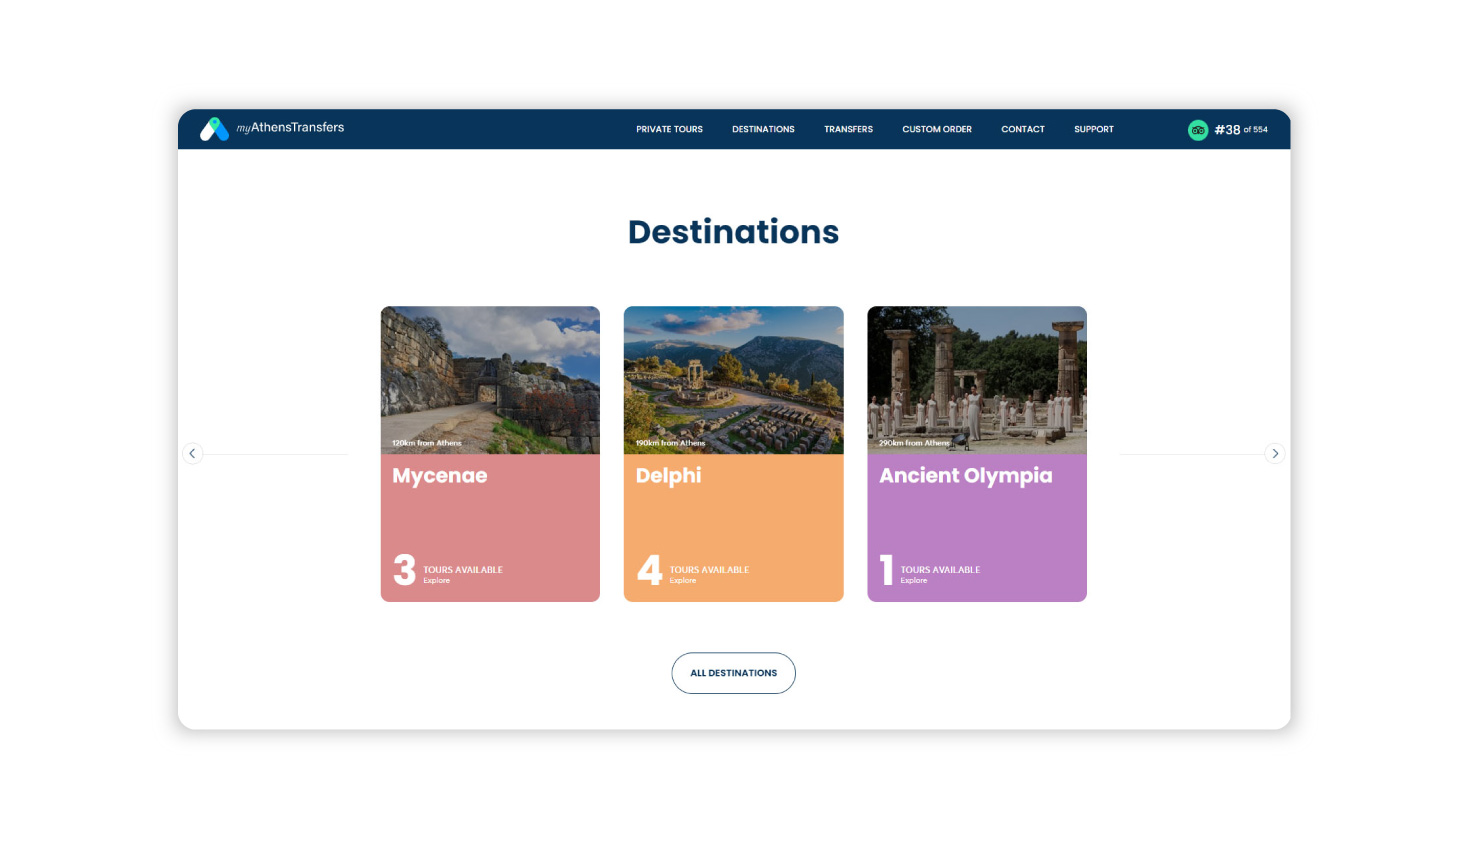 The destinations page WEB DESIGN AND DEVELOPMENT